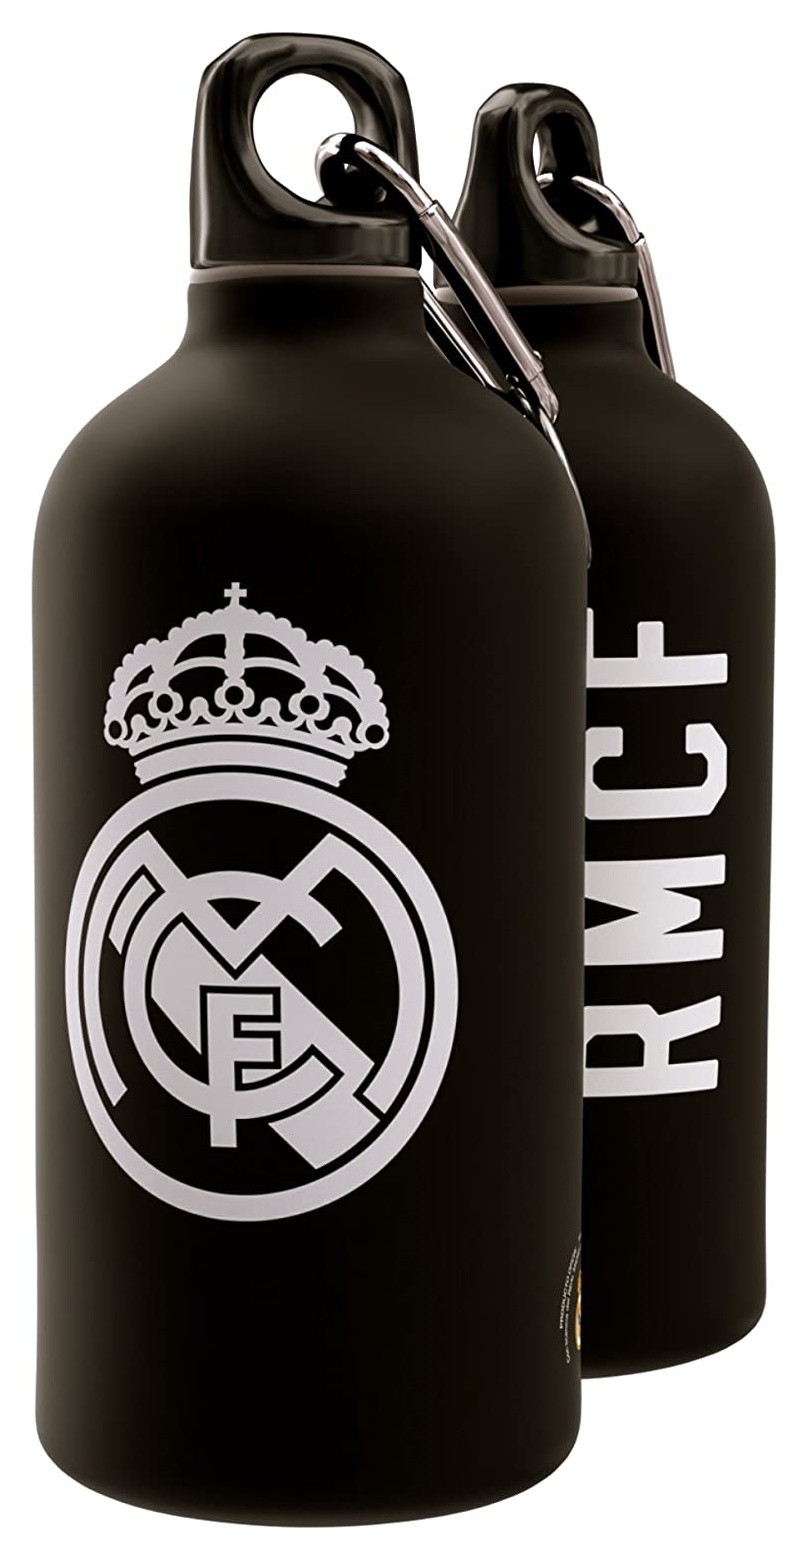 Botella Real Madrid 2019/2020 Negro